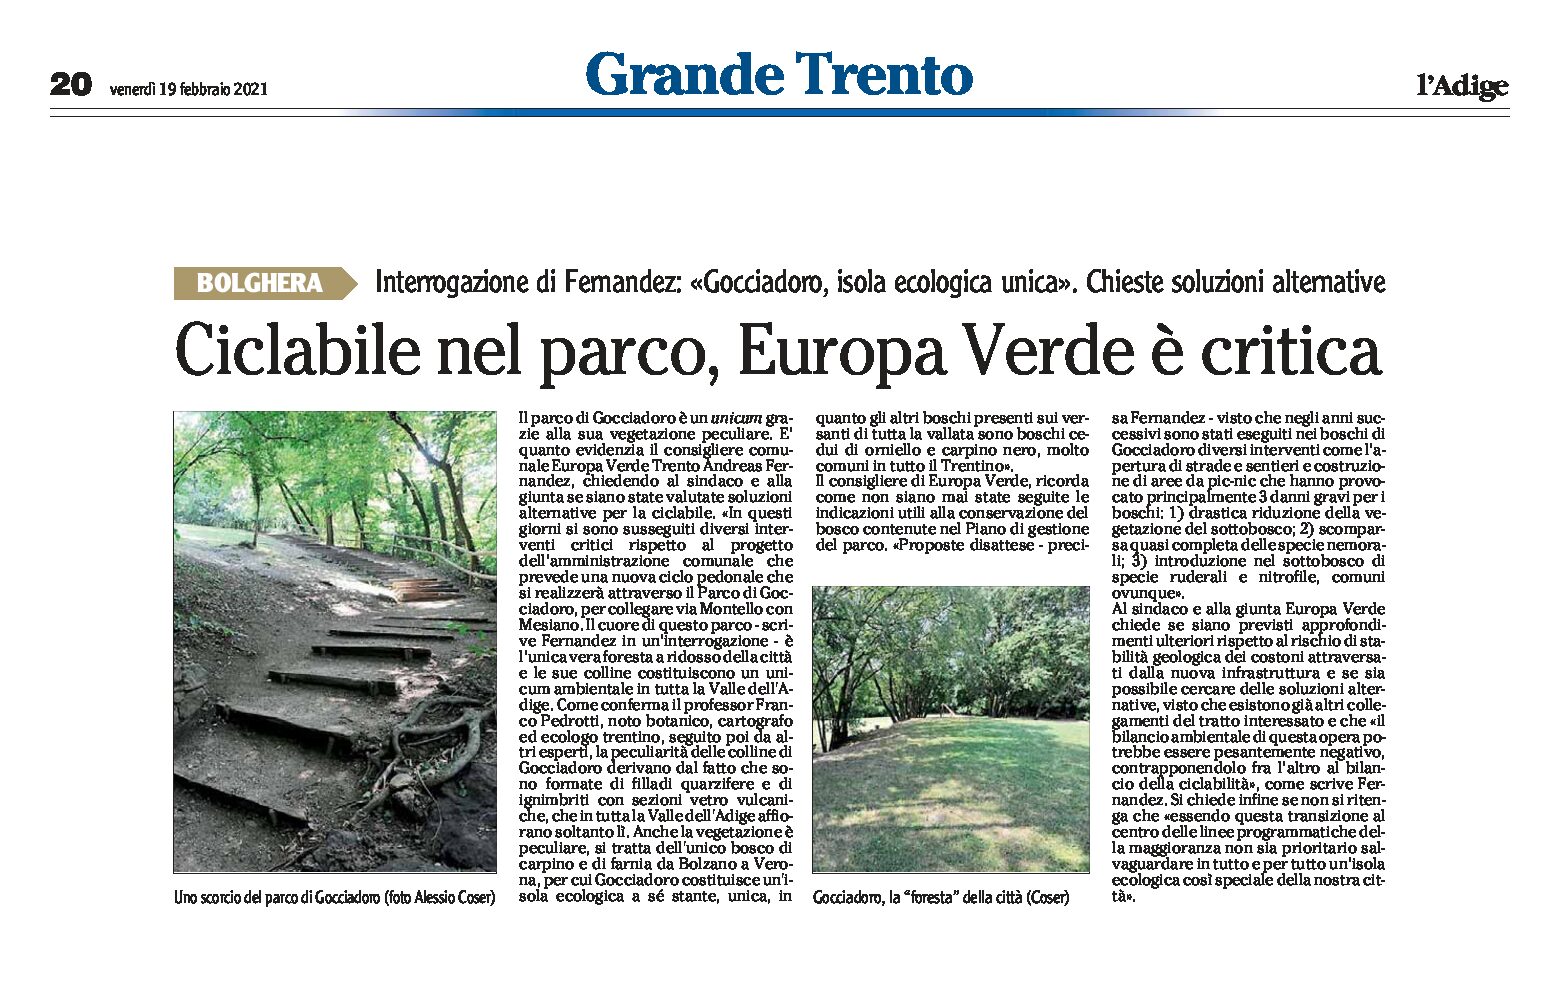 Trento, Gocciadoro: ciclabile nel parco, critica Europa Verde “isola ecologica unica”